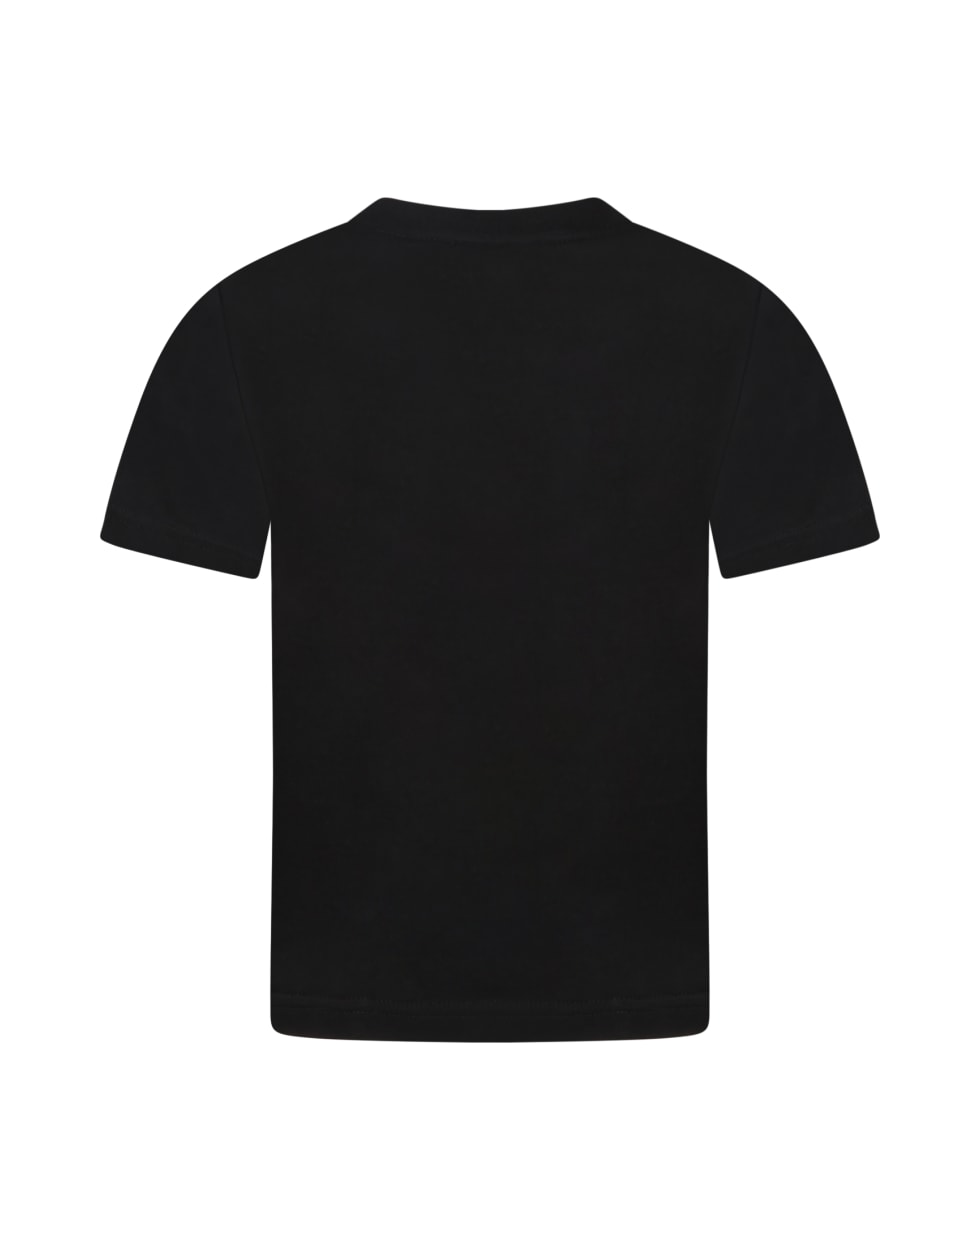 Burberry Black T-shirt For Kids With Beige Logo - Black